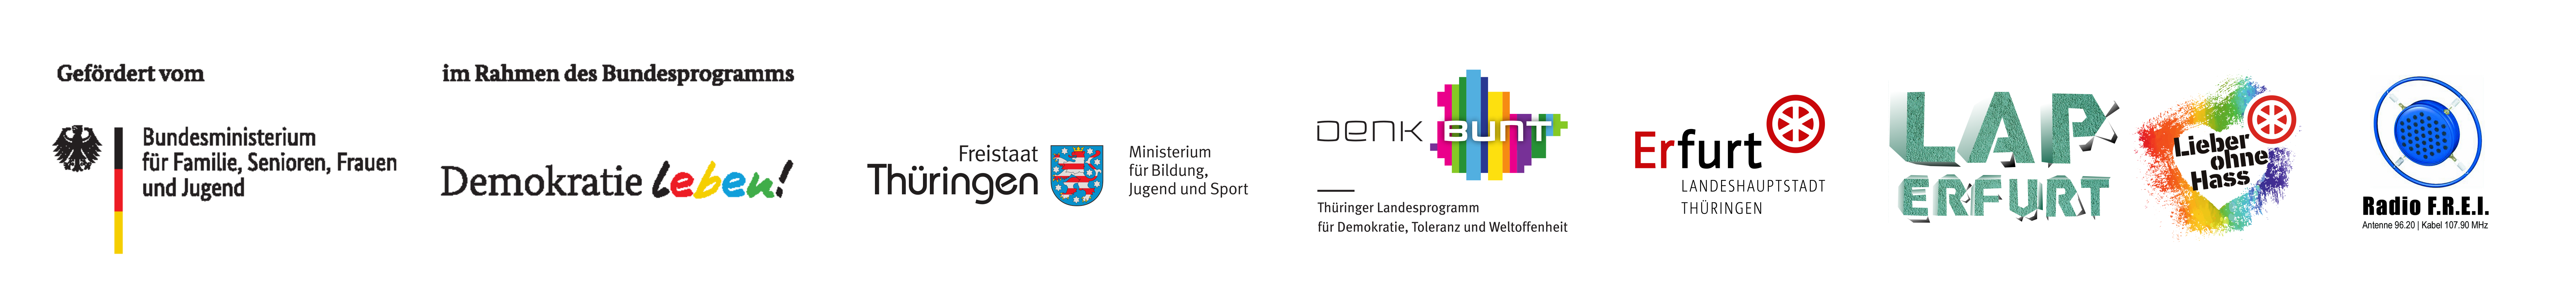 Logoreihe-PfD-Erfurt-ab-2020-fu--r-DRUCK.png